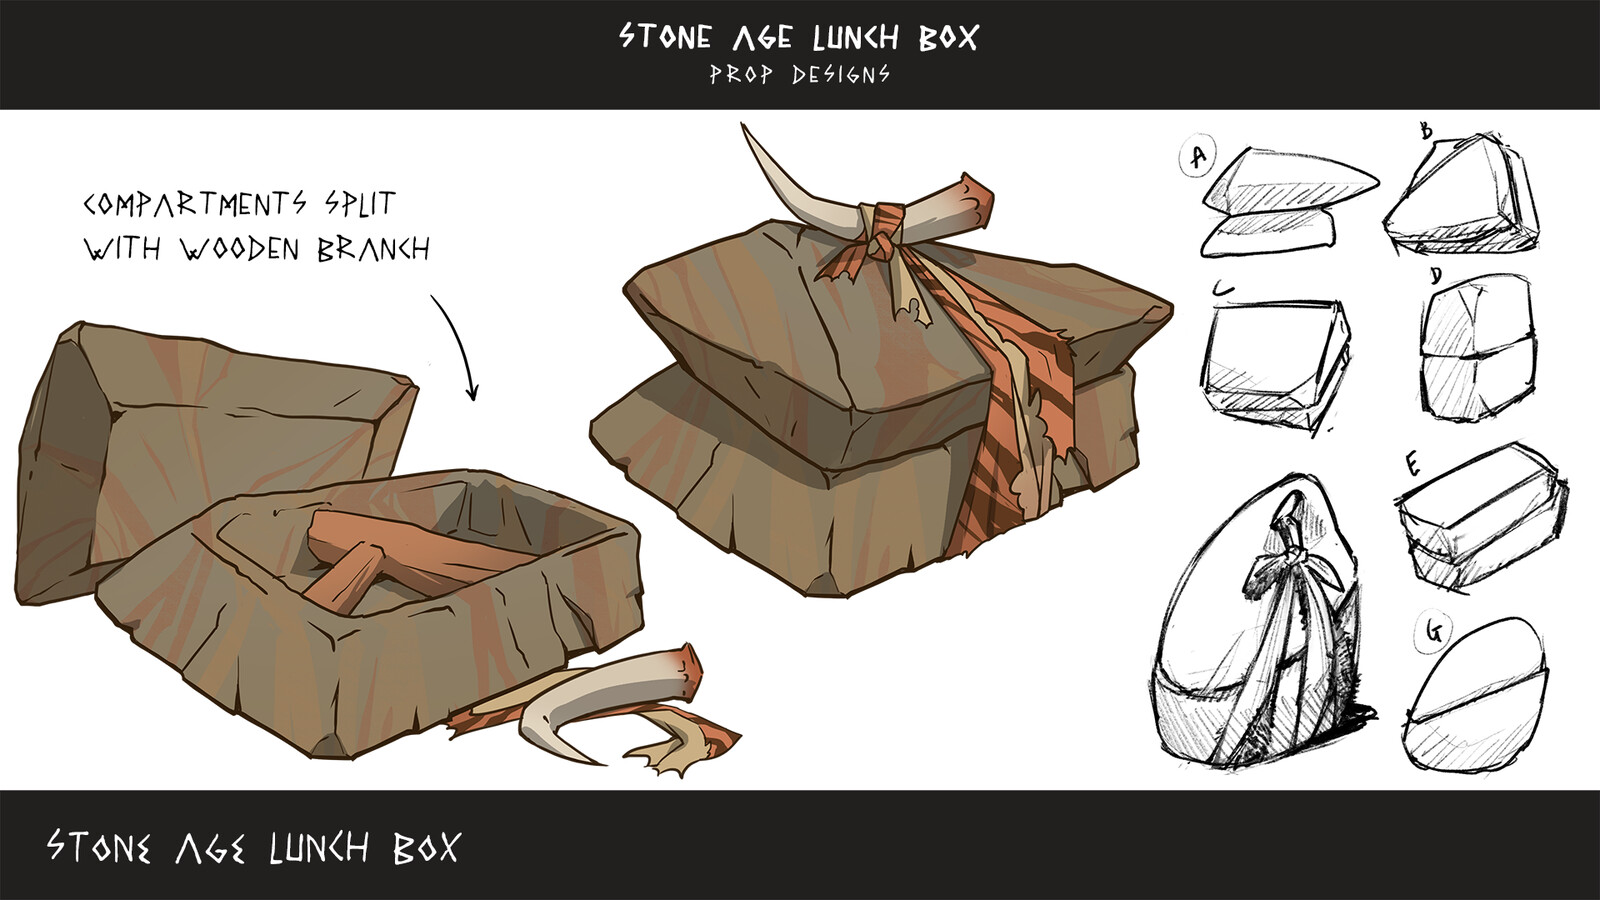 A Prehistoric Lunchbox